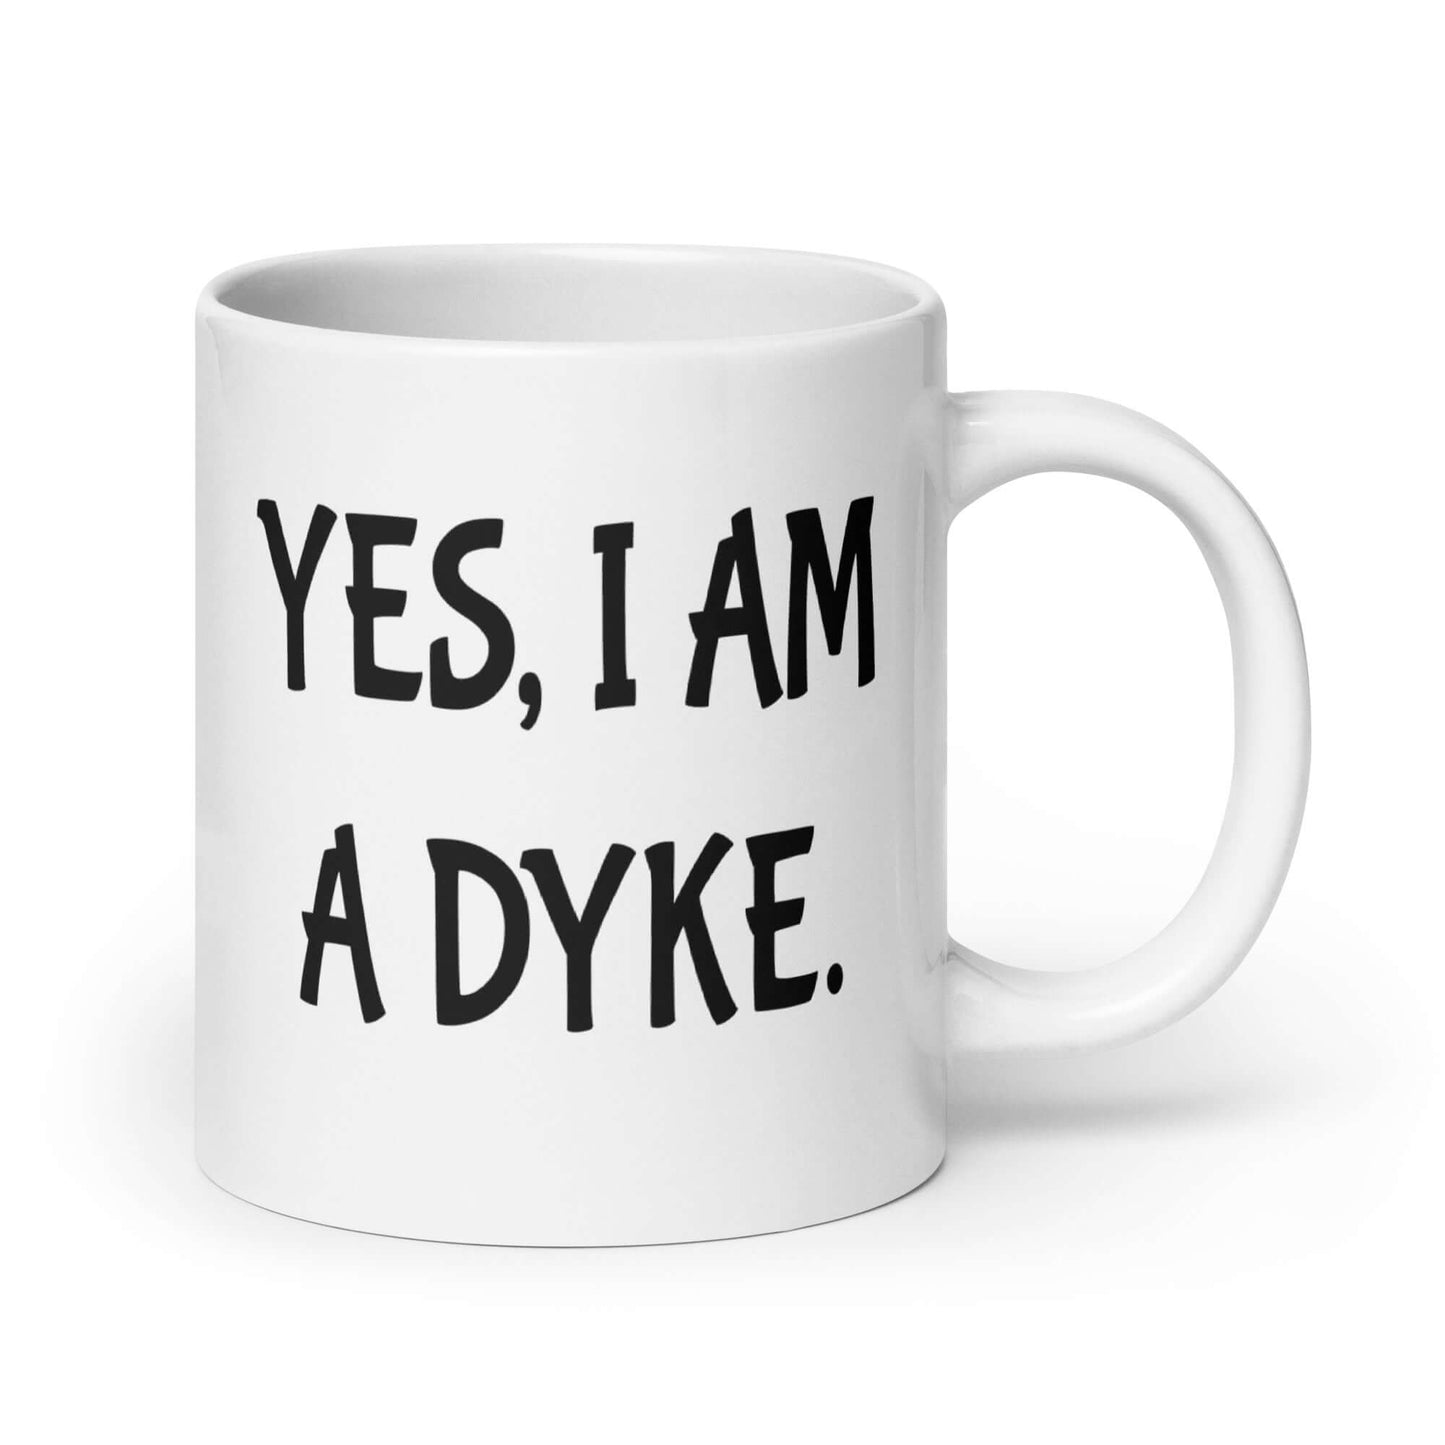 Yes, I'm a dyke lesbian pride Mug